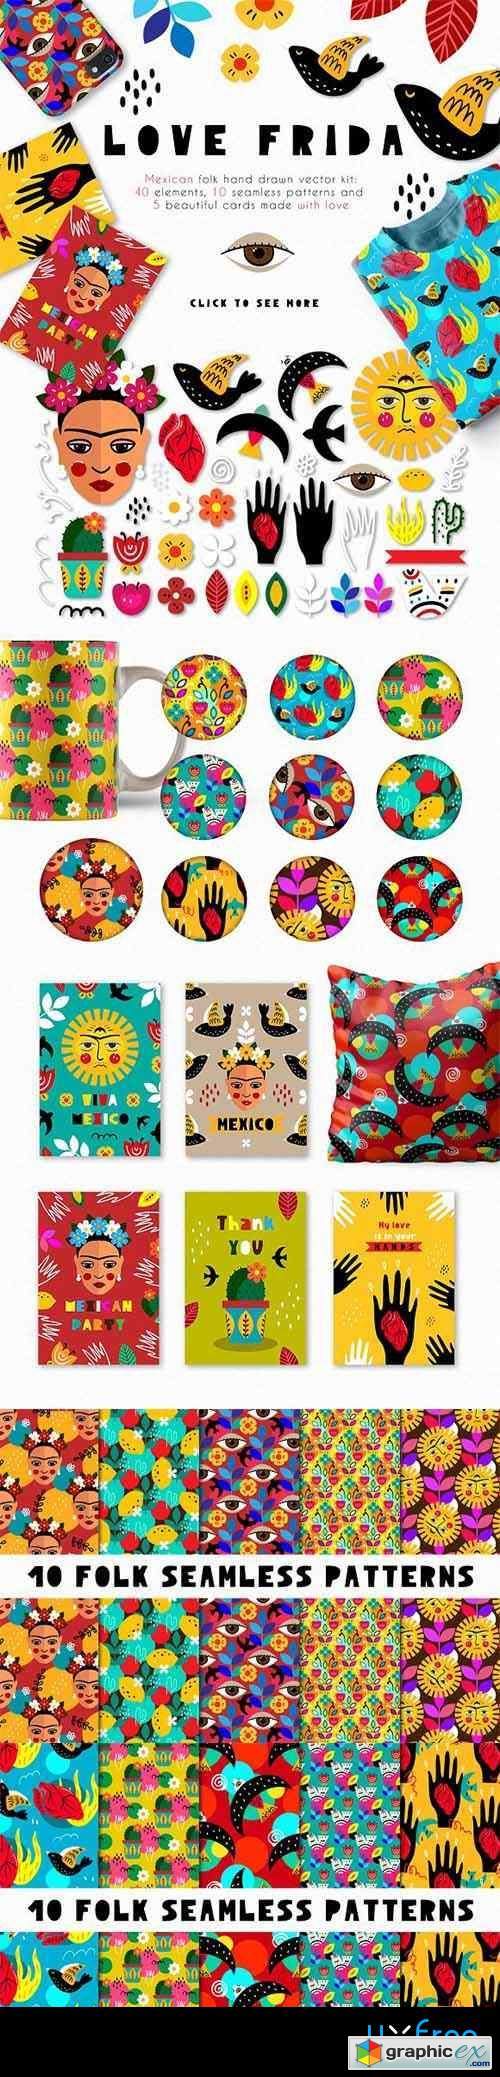 Love Frida - Mexican folk kit